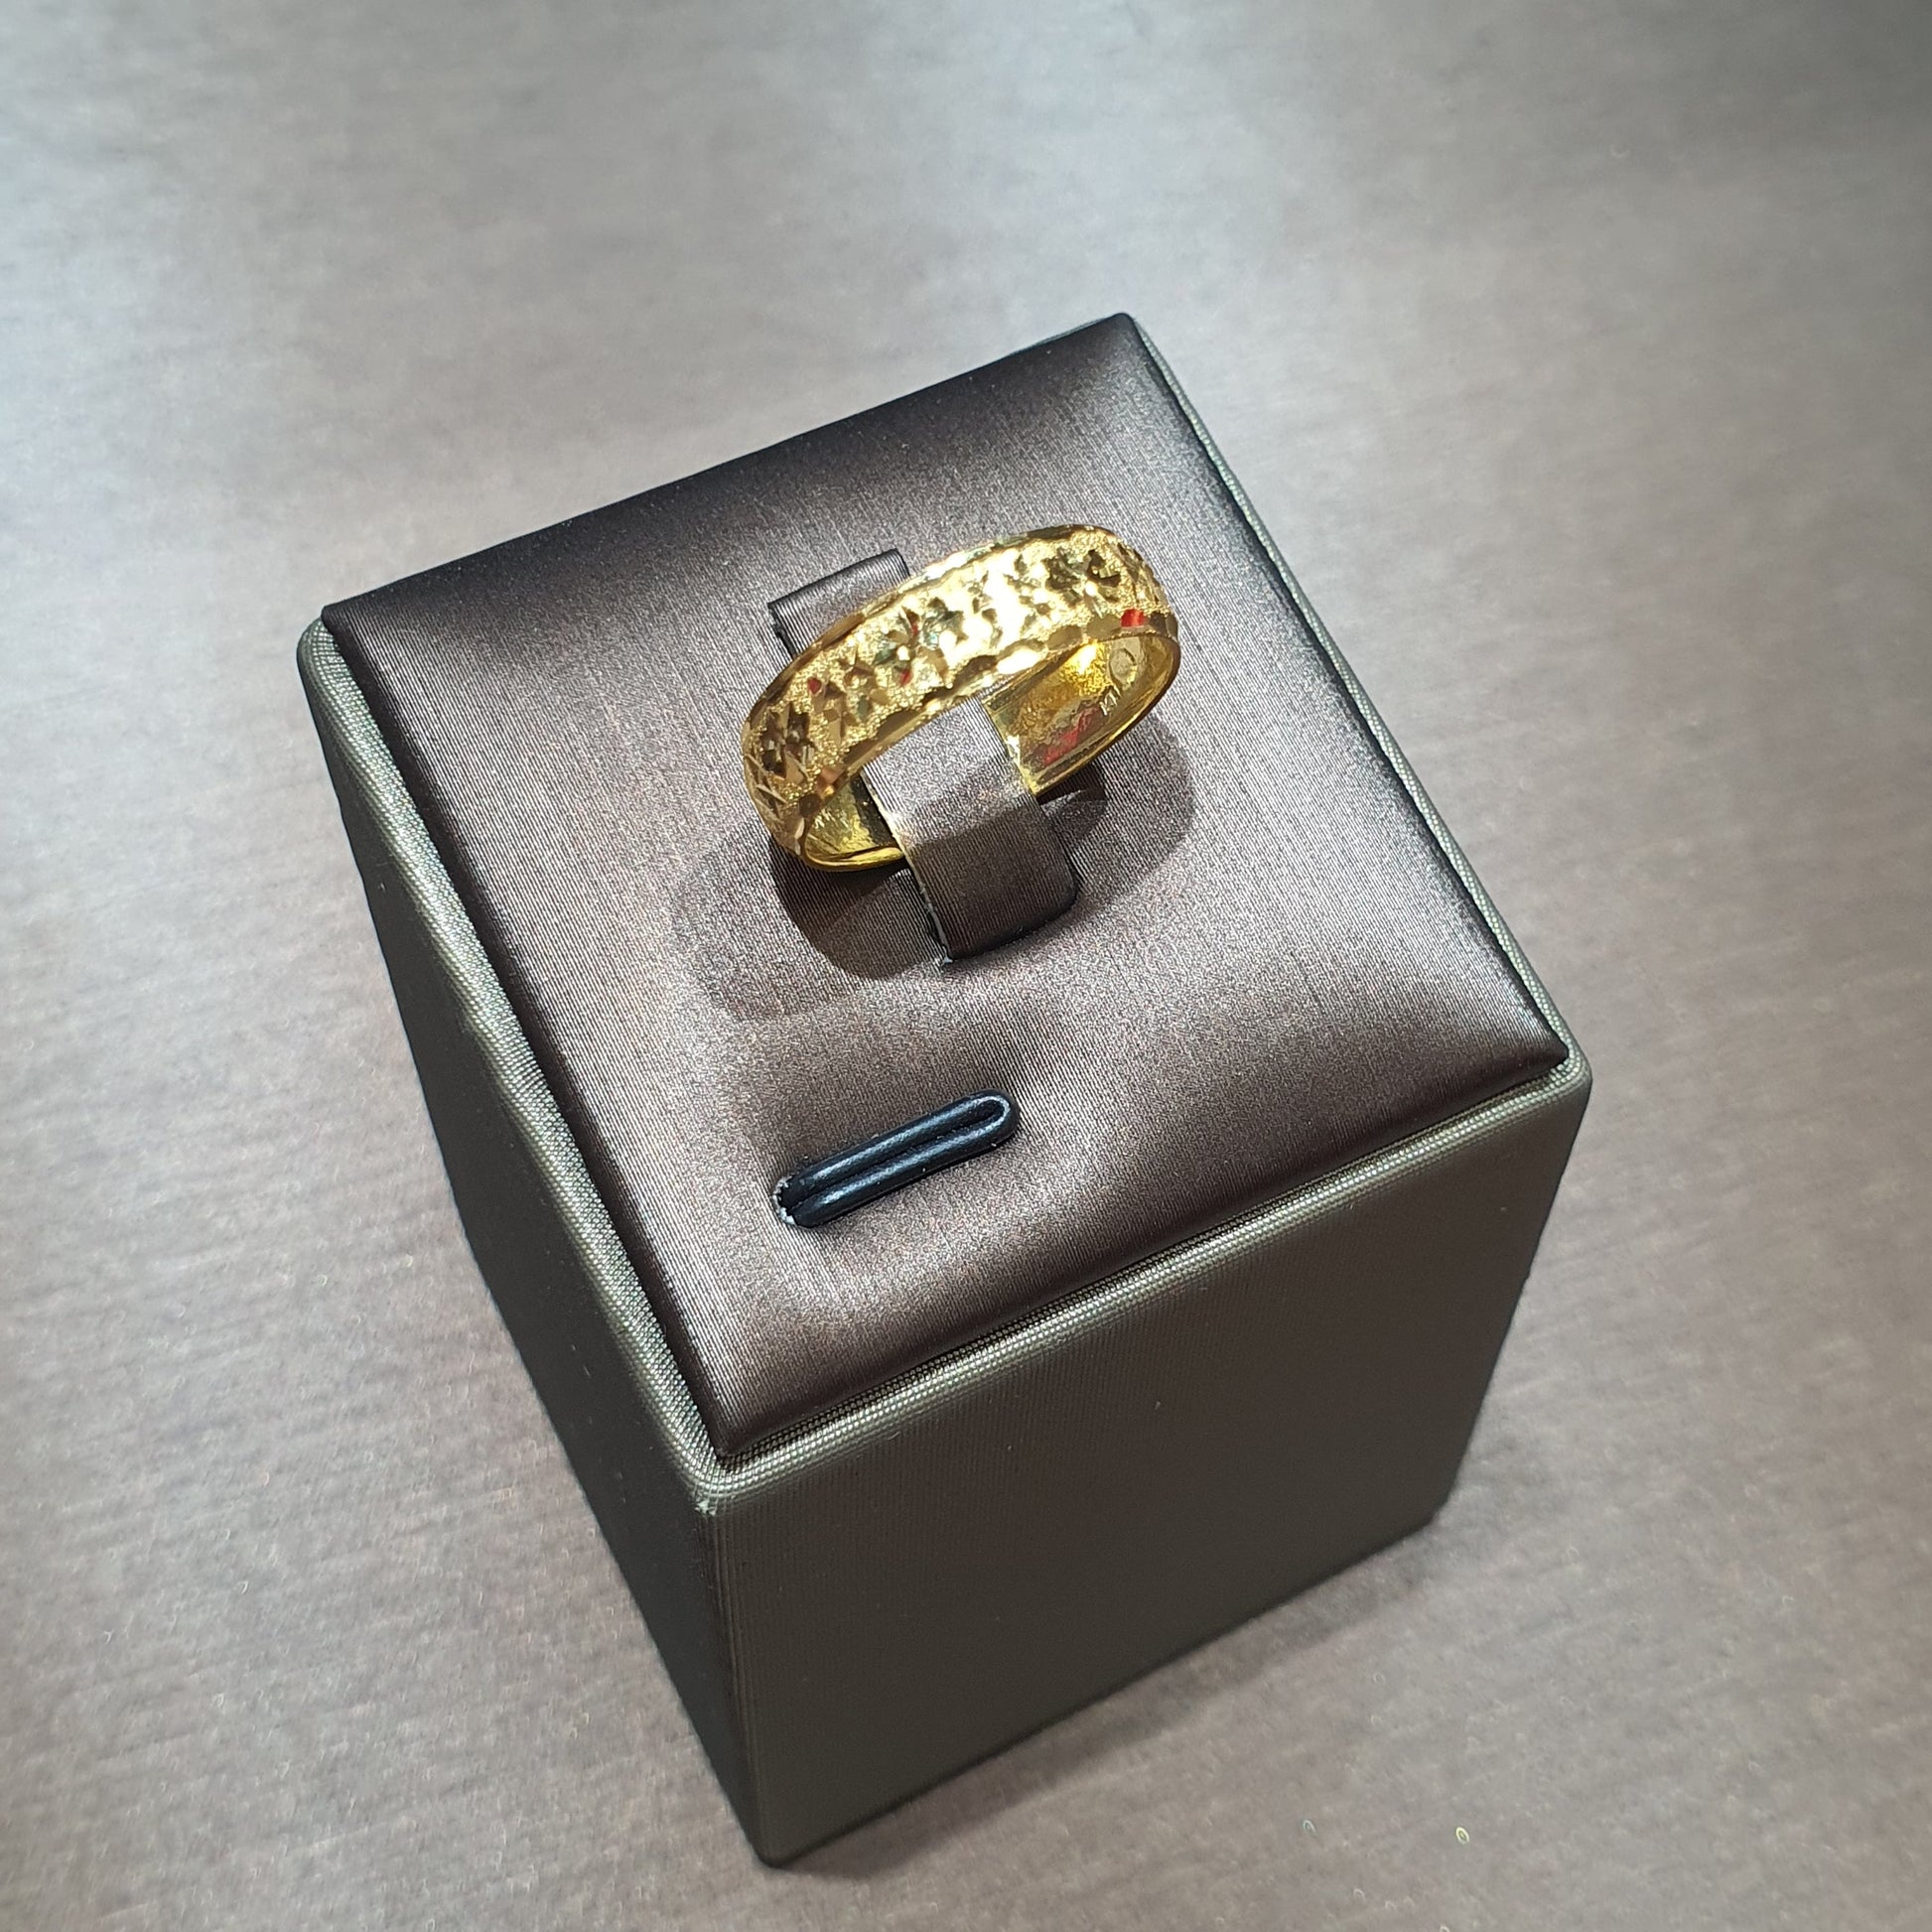 22k / 916 Gold Hollow Ring V7-Rings-Best Gold Shop